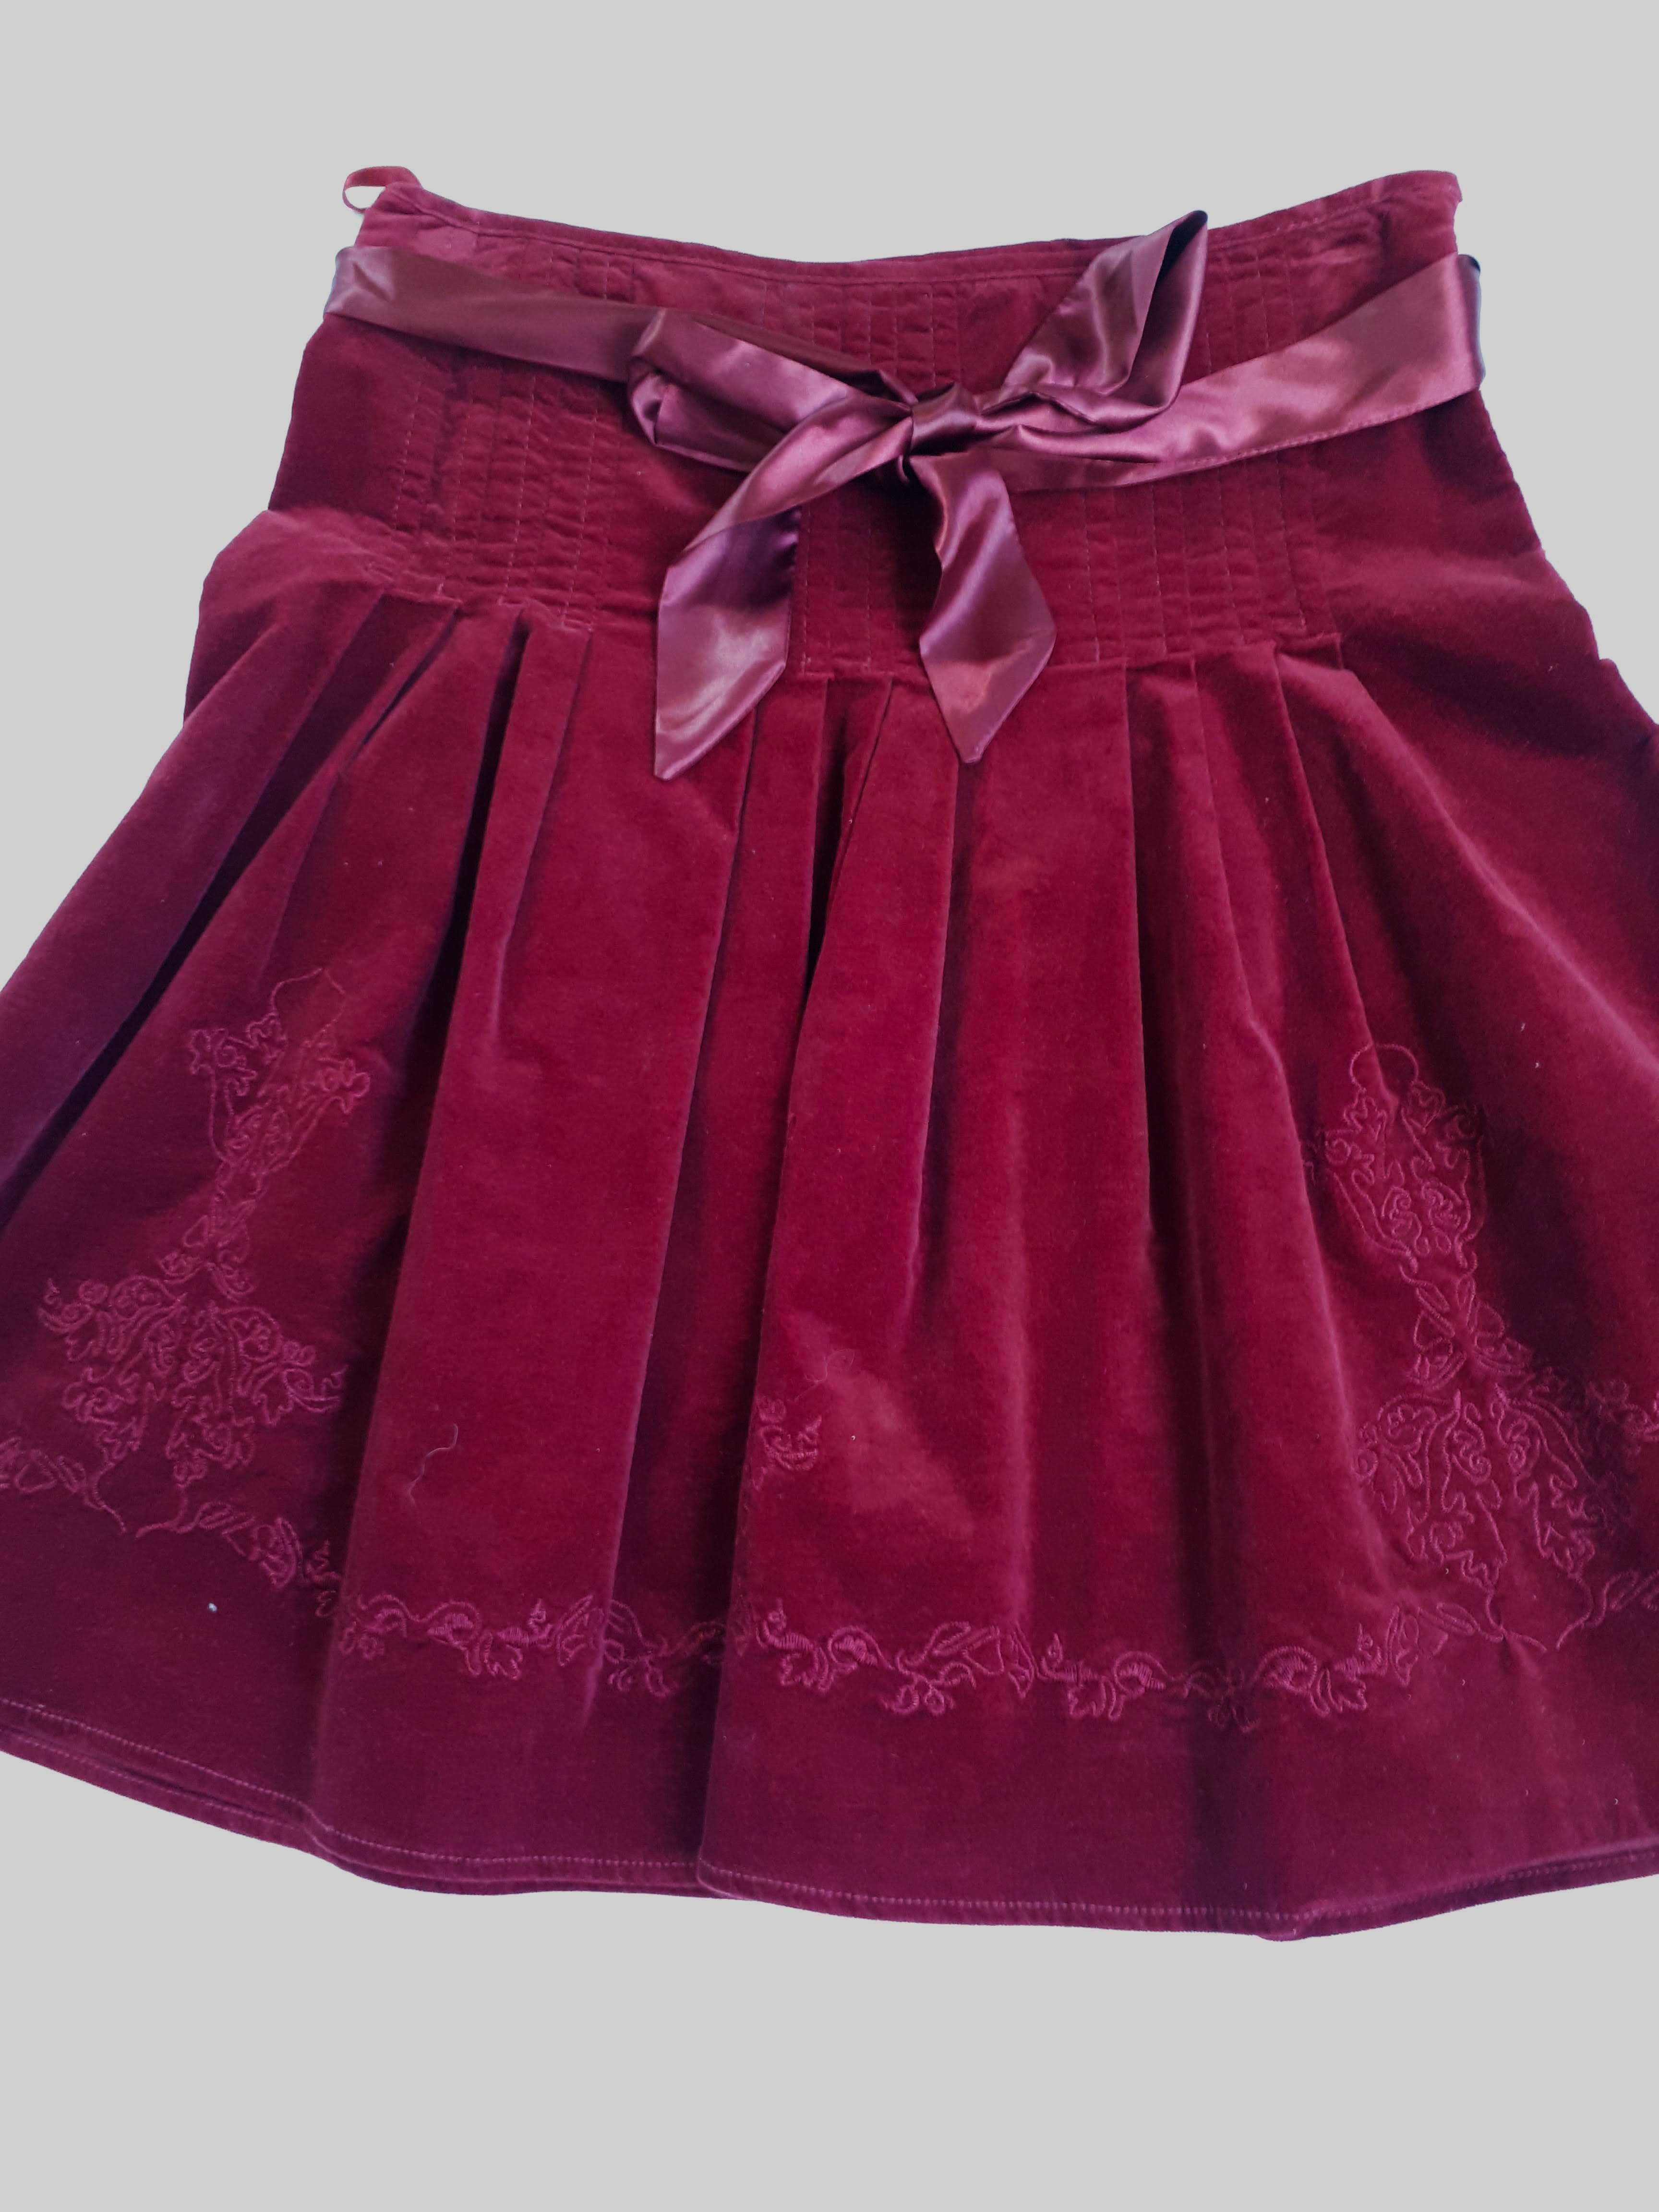 aksamitna spódnica RESERVED haft bordo roz 36 j NOWA